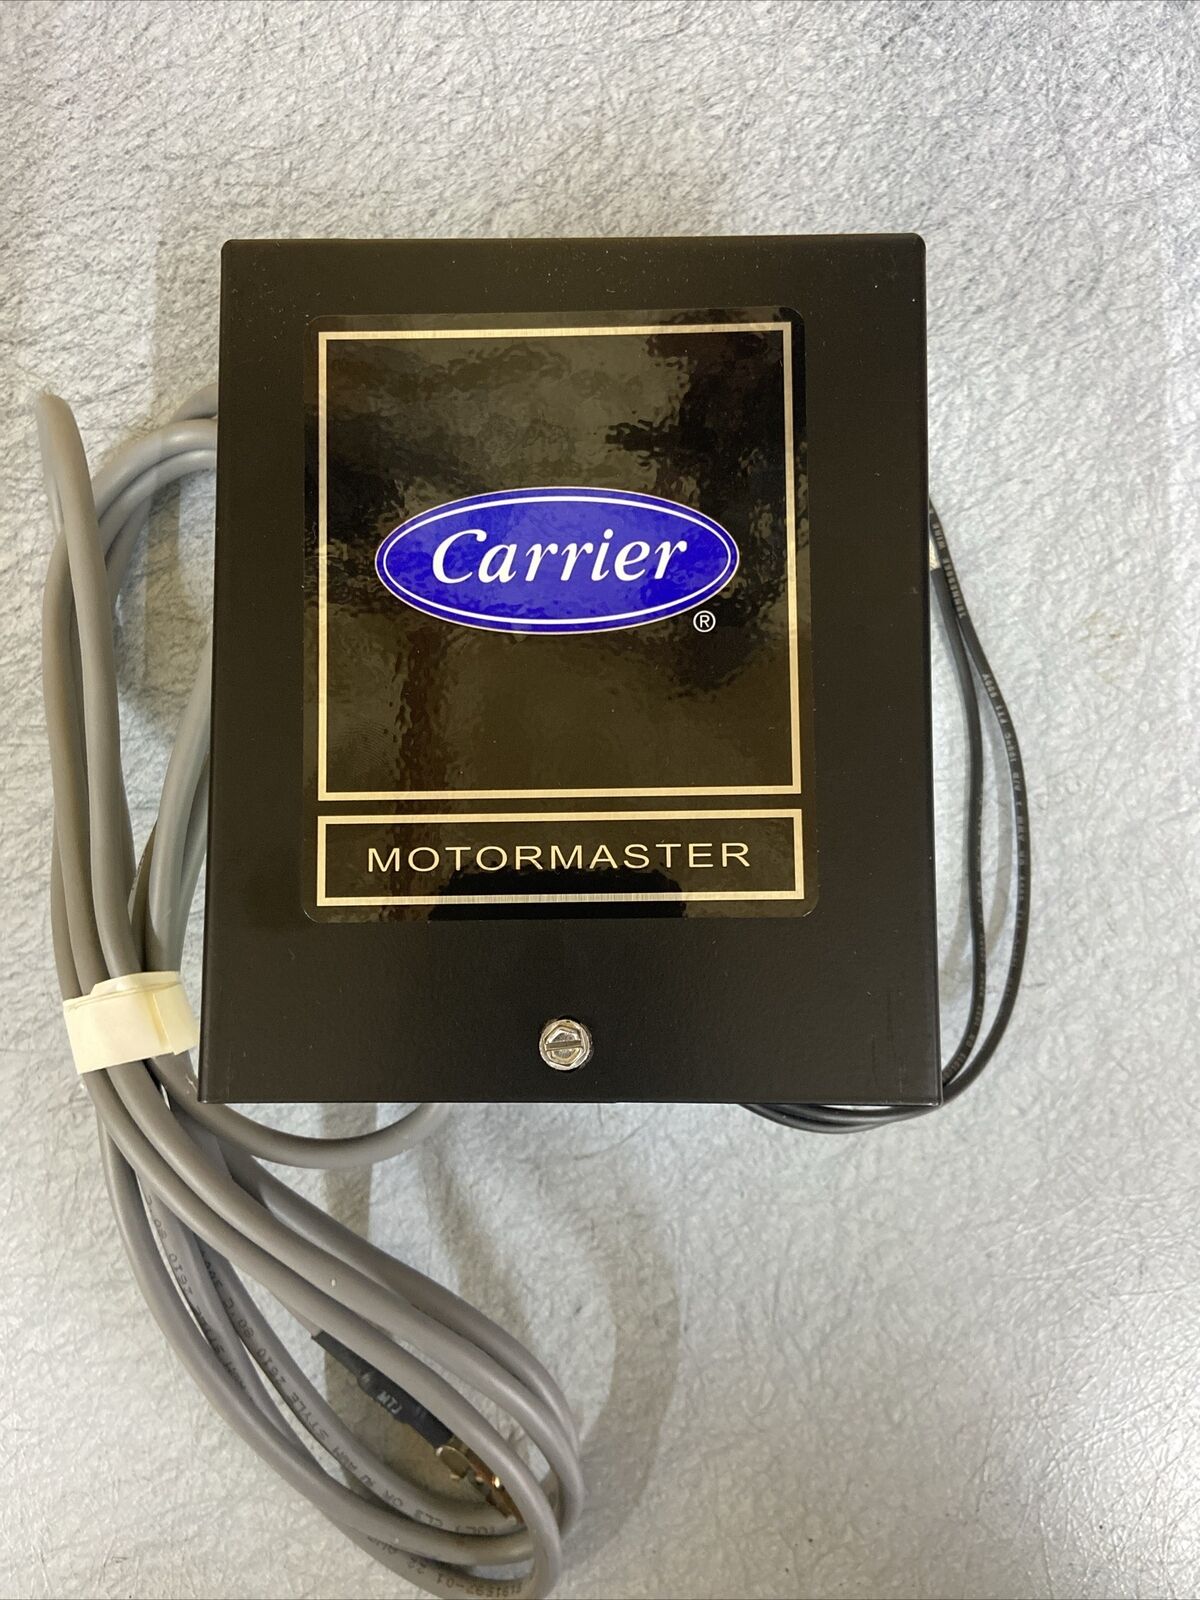 Carrier Motor master 32LT 660 004- P\N: 990-151-1A-U, BRAND NEW